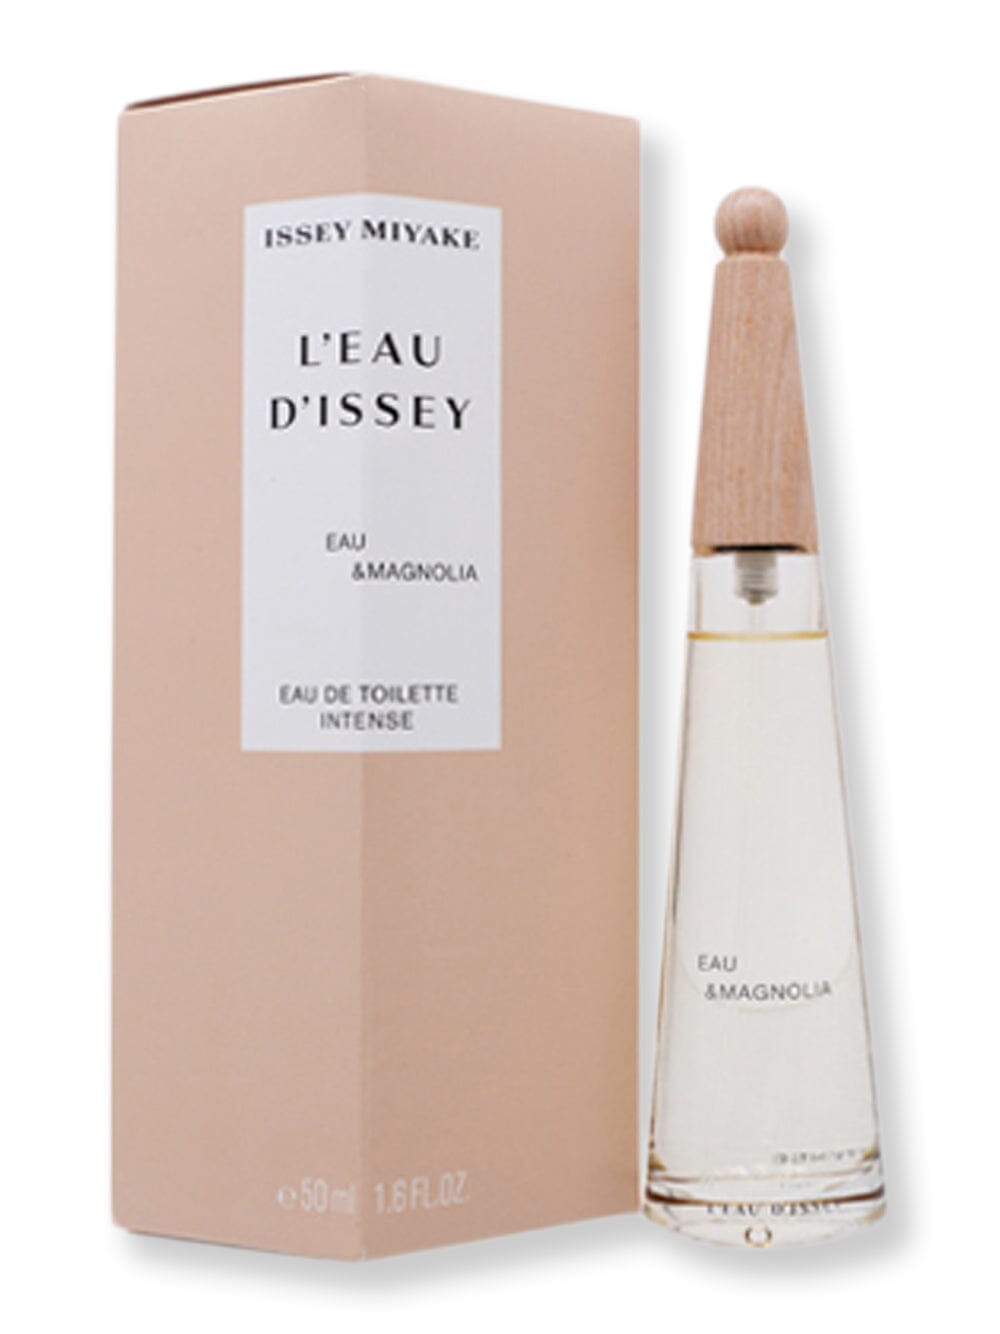 Issey Miyake Issey Miyake L'eau D'issey Eau & Magnolia EDT Spray Intense 1.7 oz50 ml Perfume 